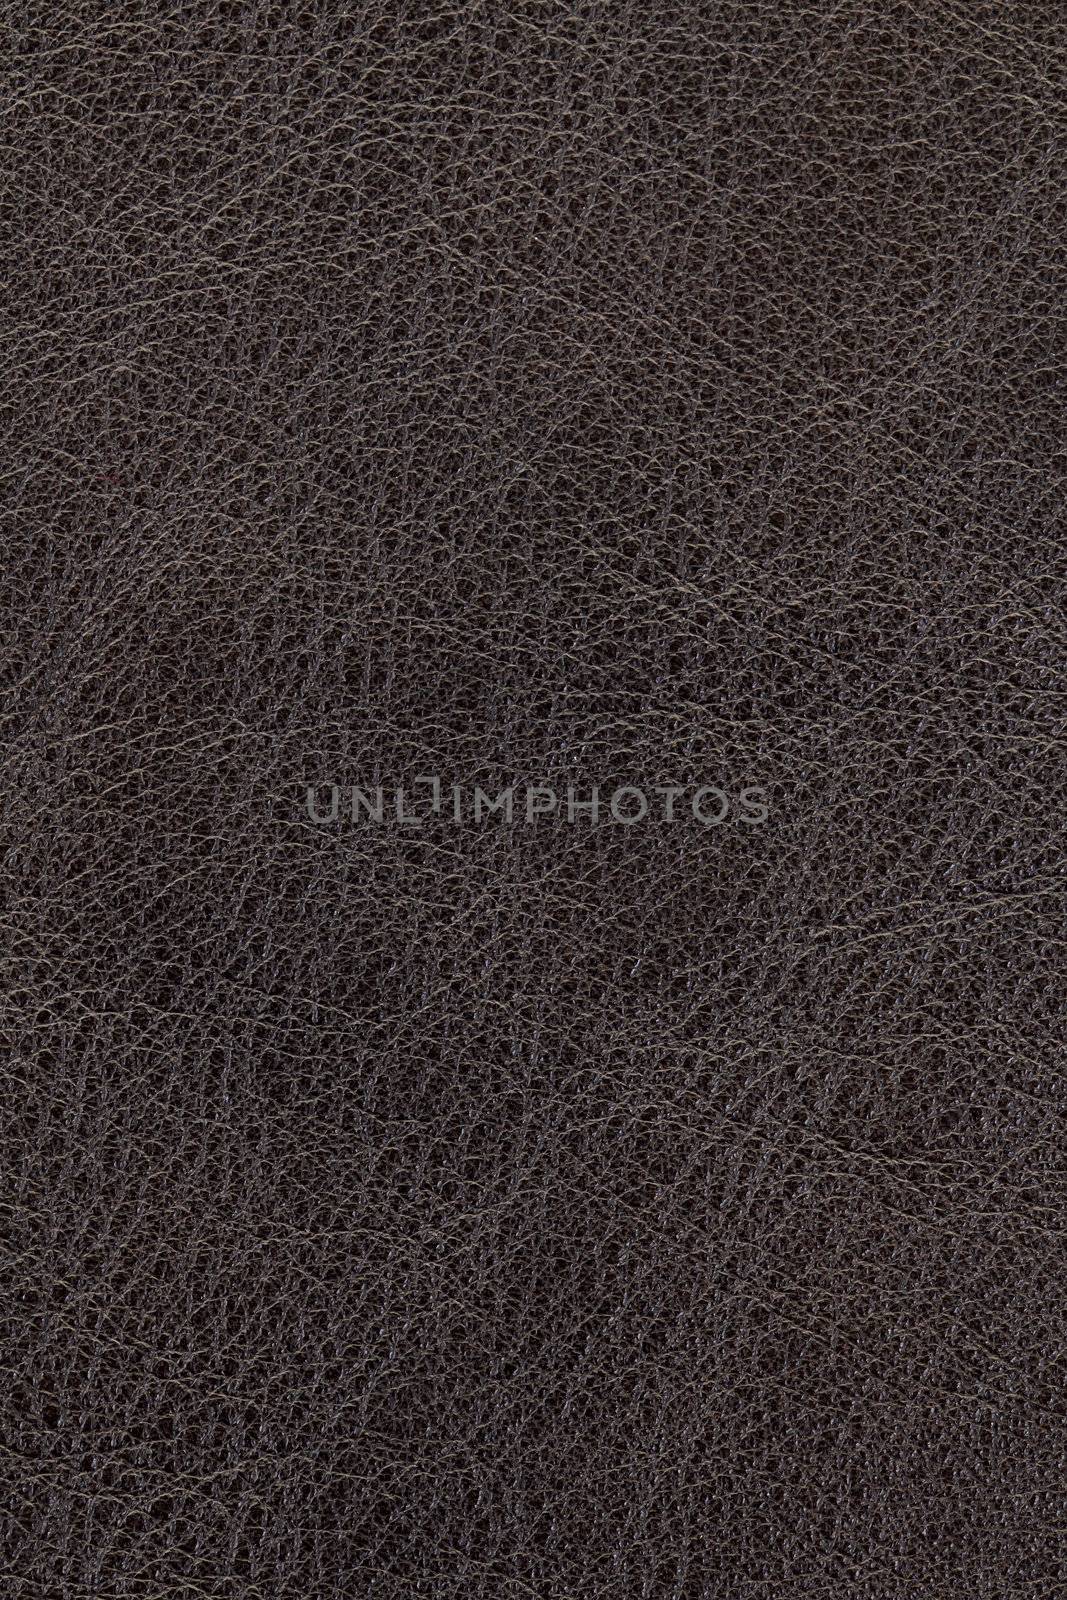 Dark brown leather background by elenathewise